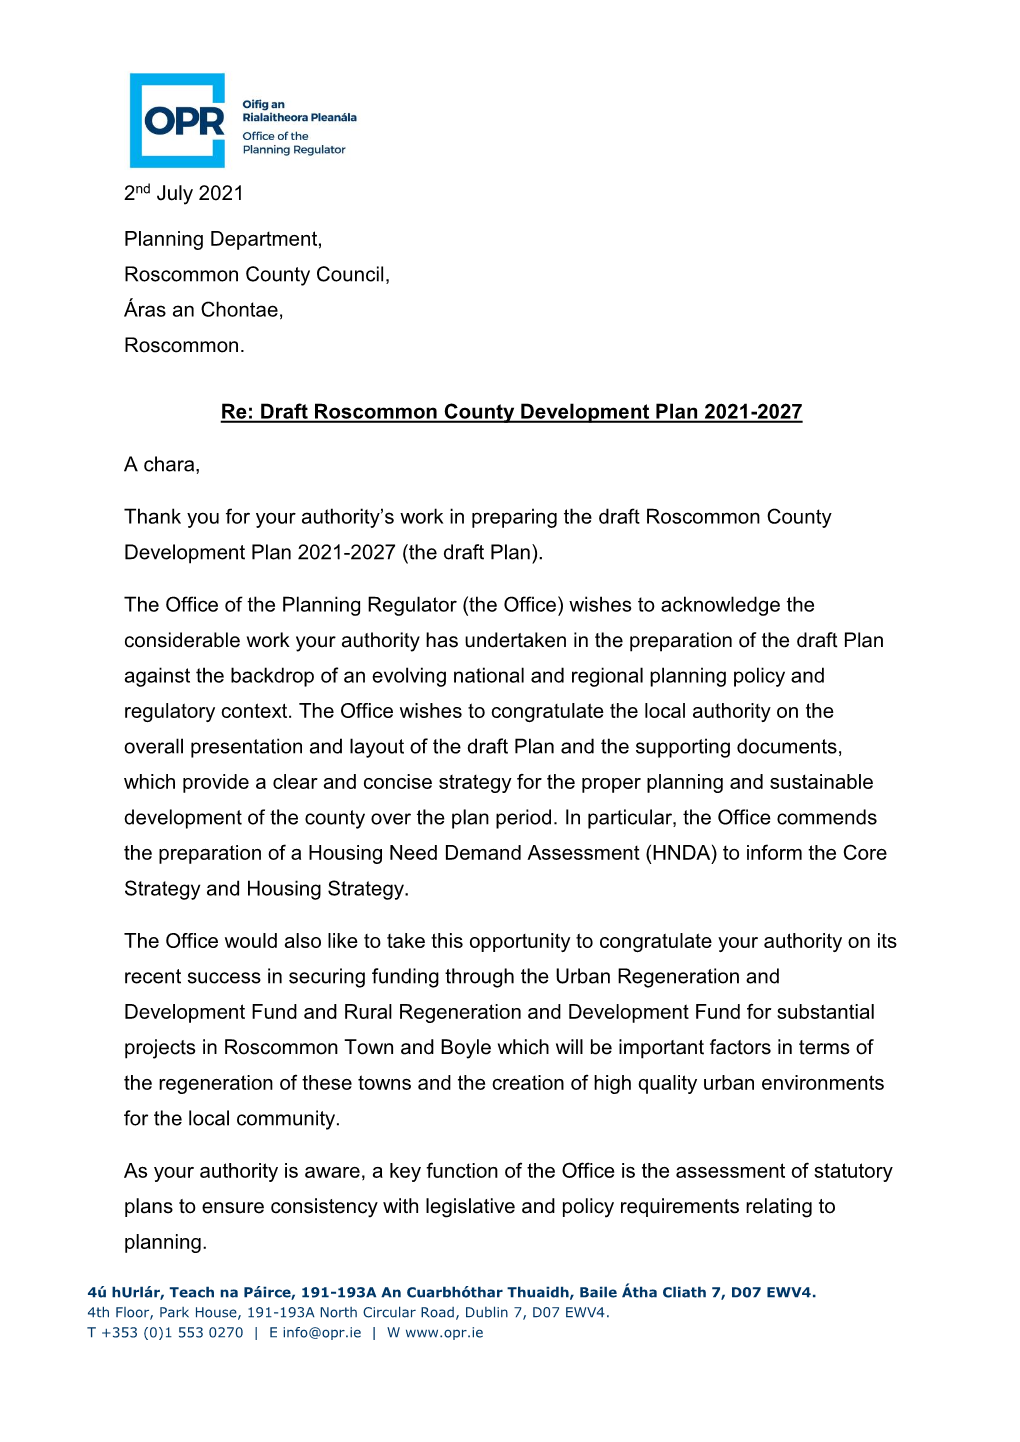 Draft Roscommon County Development Plan 2021-2027